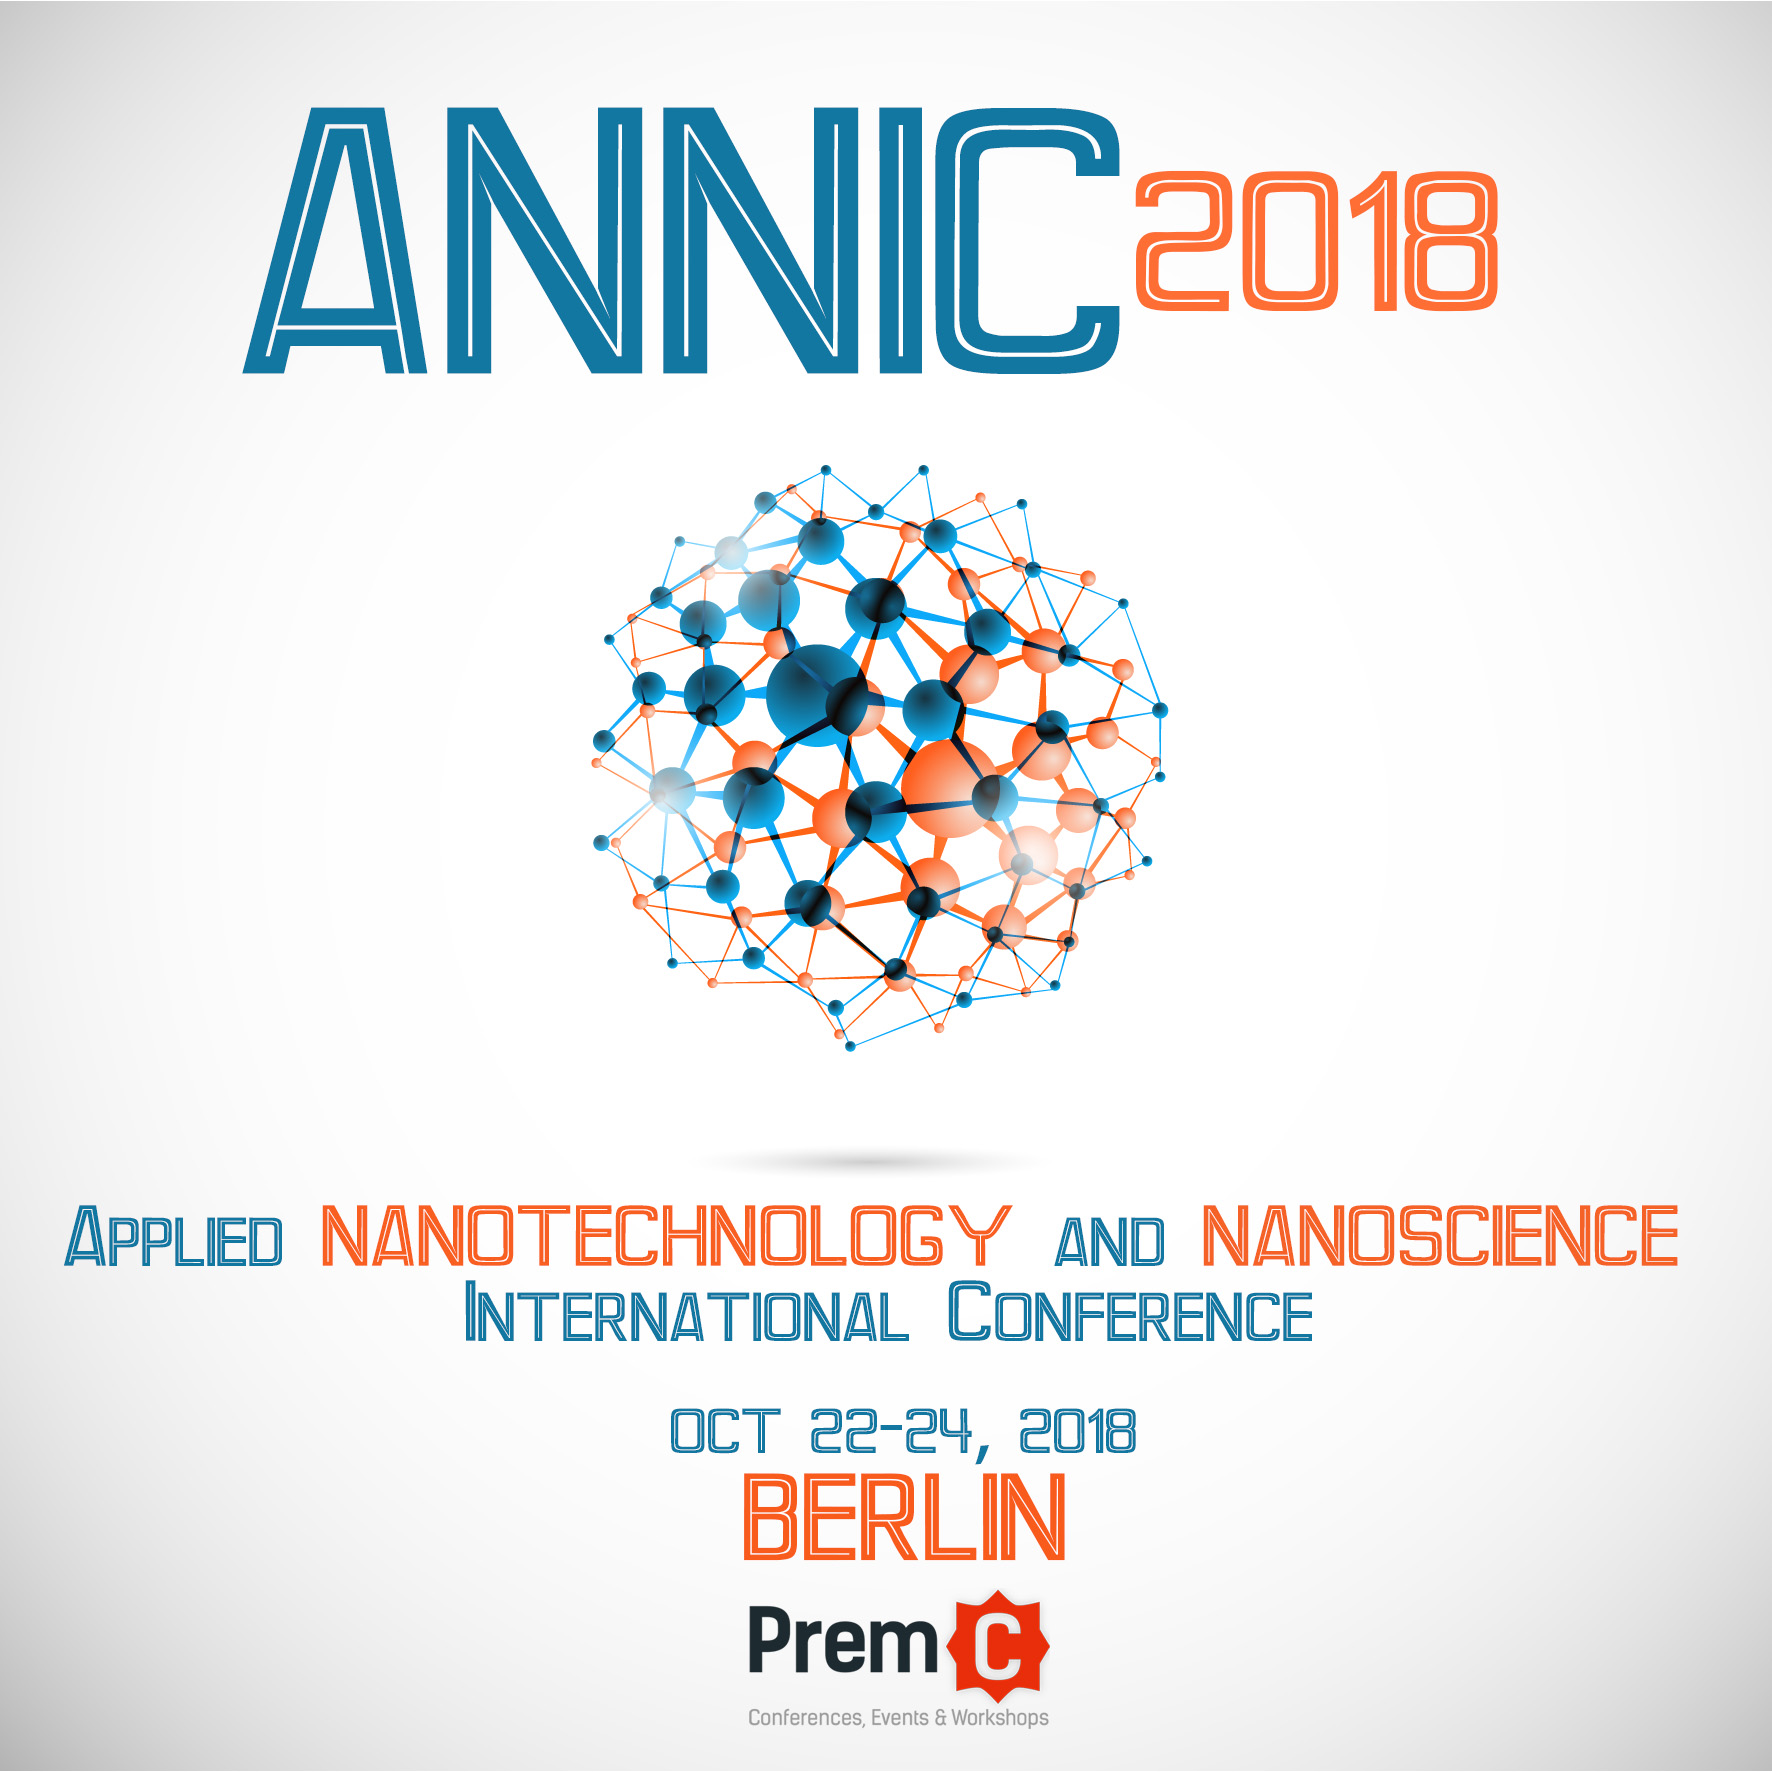 Applied Nanotechnology and Nanoscience International Conference - ANNIC 2018